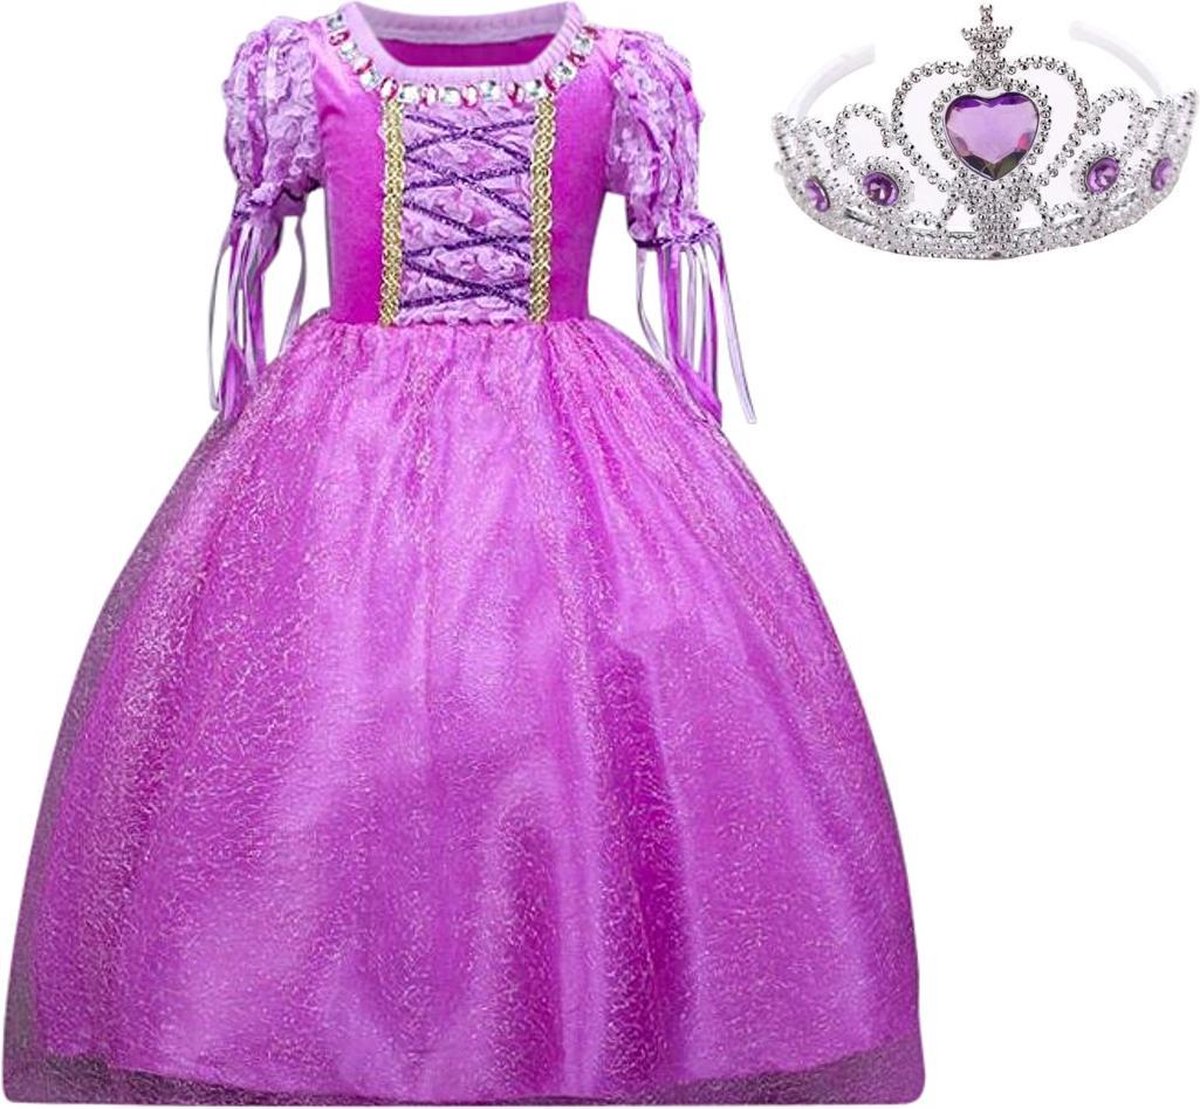 Sprookjes jurk RaponsjePrinsessen jurk verkleedjurk Deluxe 116-122 (120) paars + kroon verkleedkleding